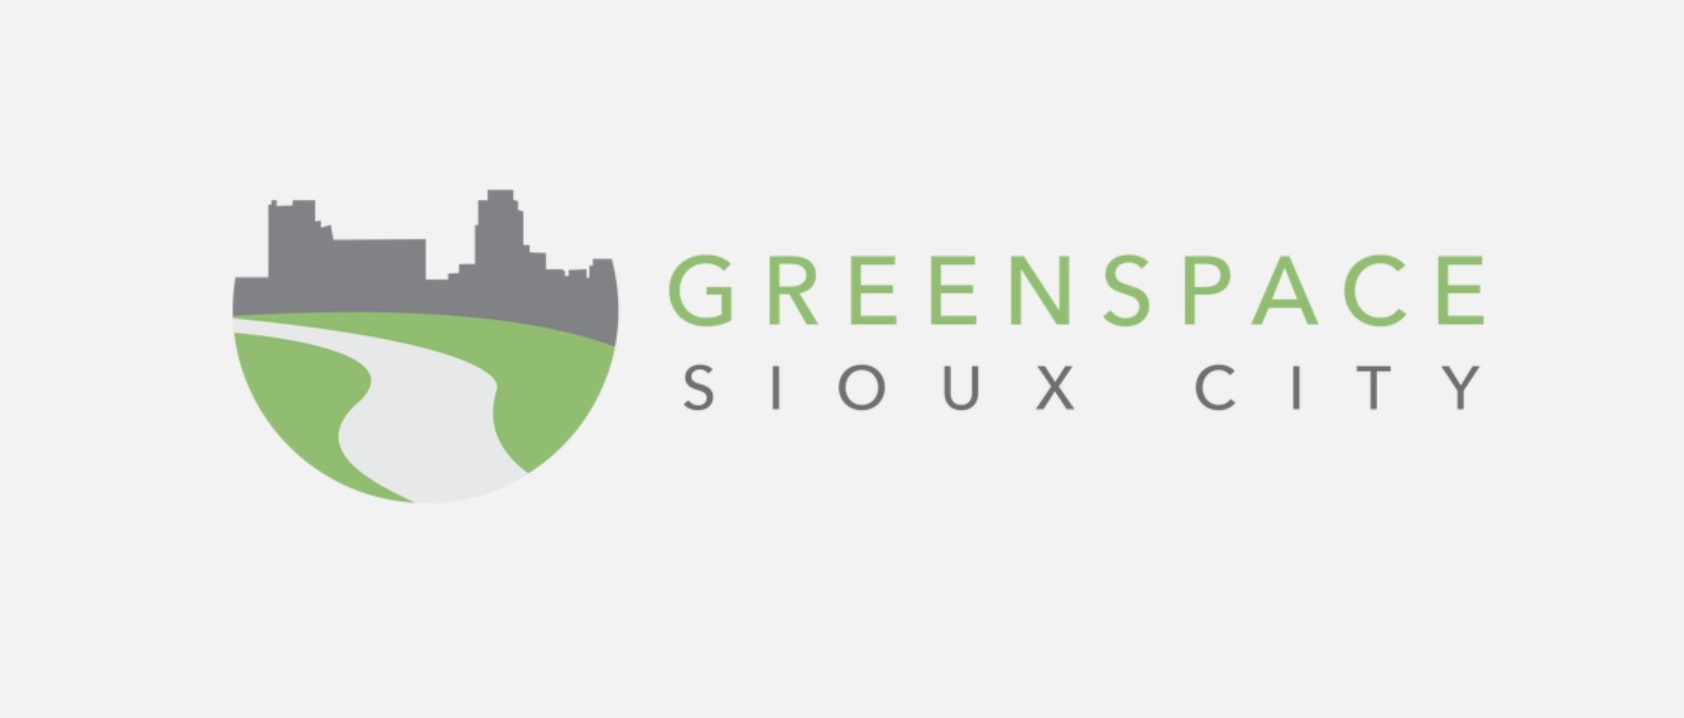 greenspace_siouxcity.jpg